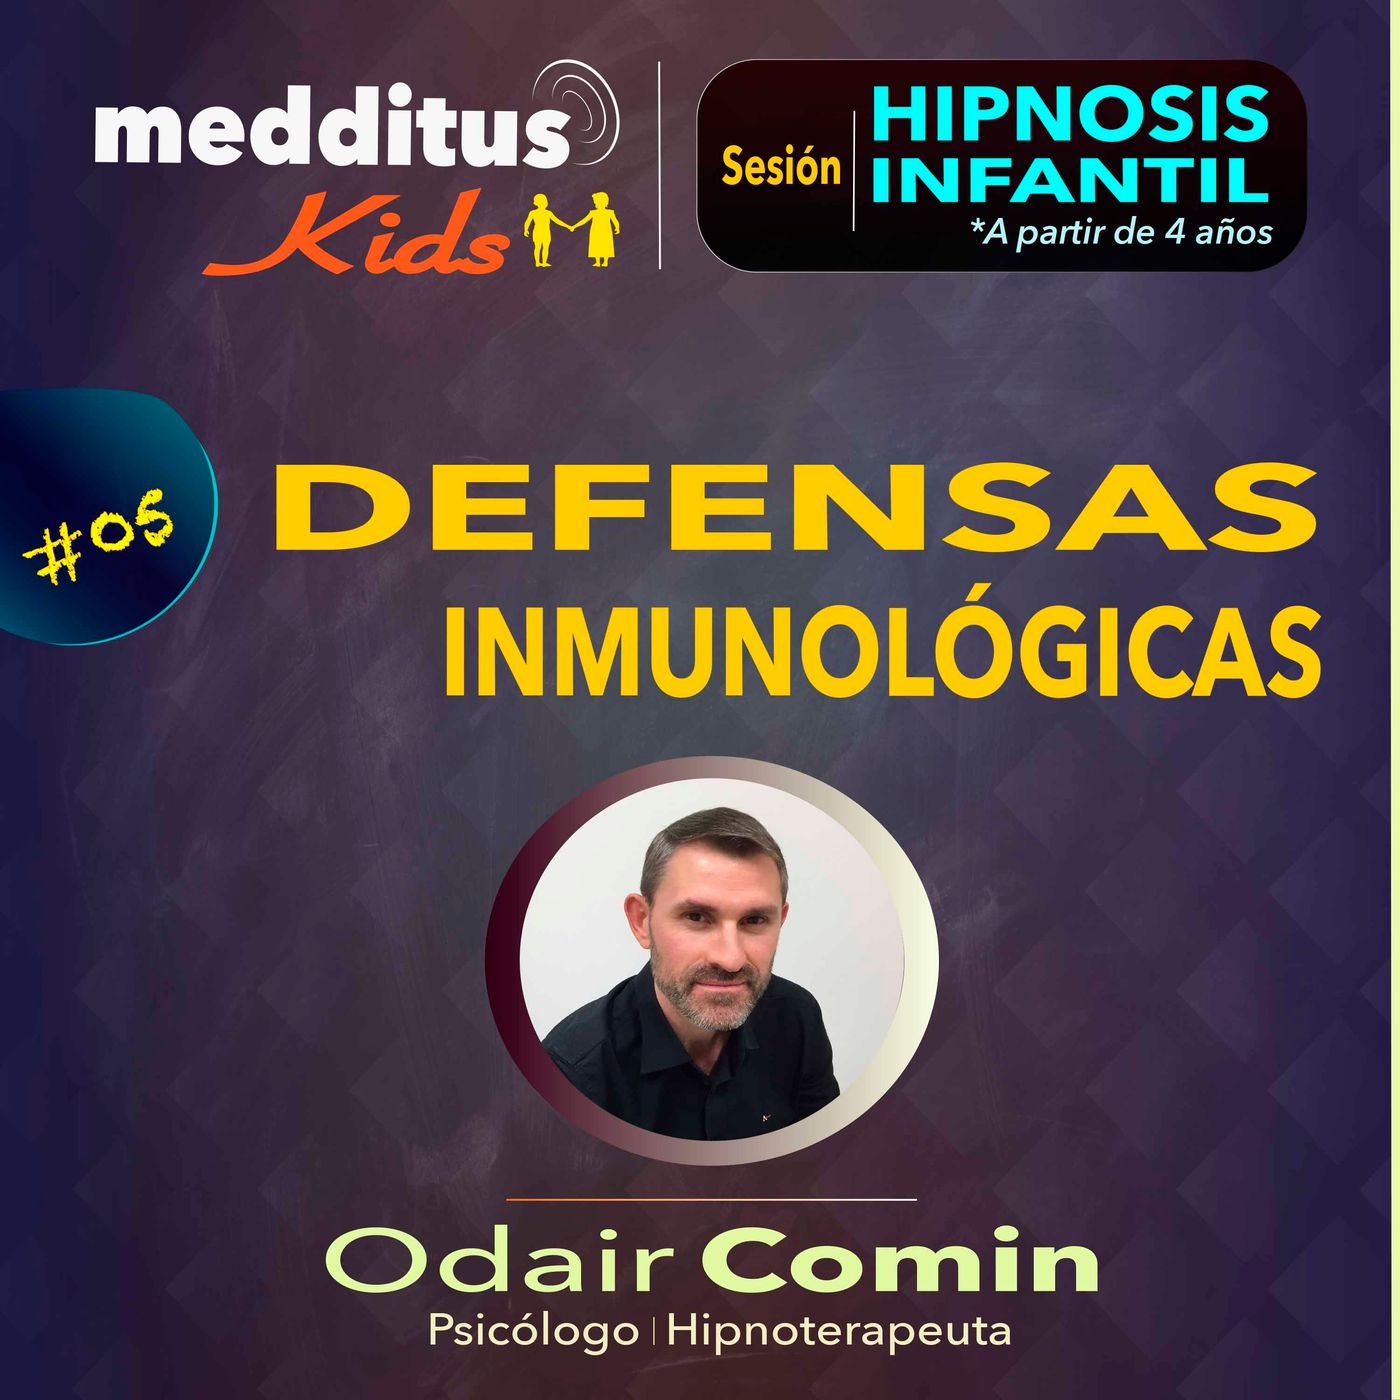 #05 Hipnosis Infantil para Desarrollar Defensas Inmunológicas | Dr. Odair Comin